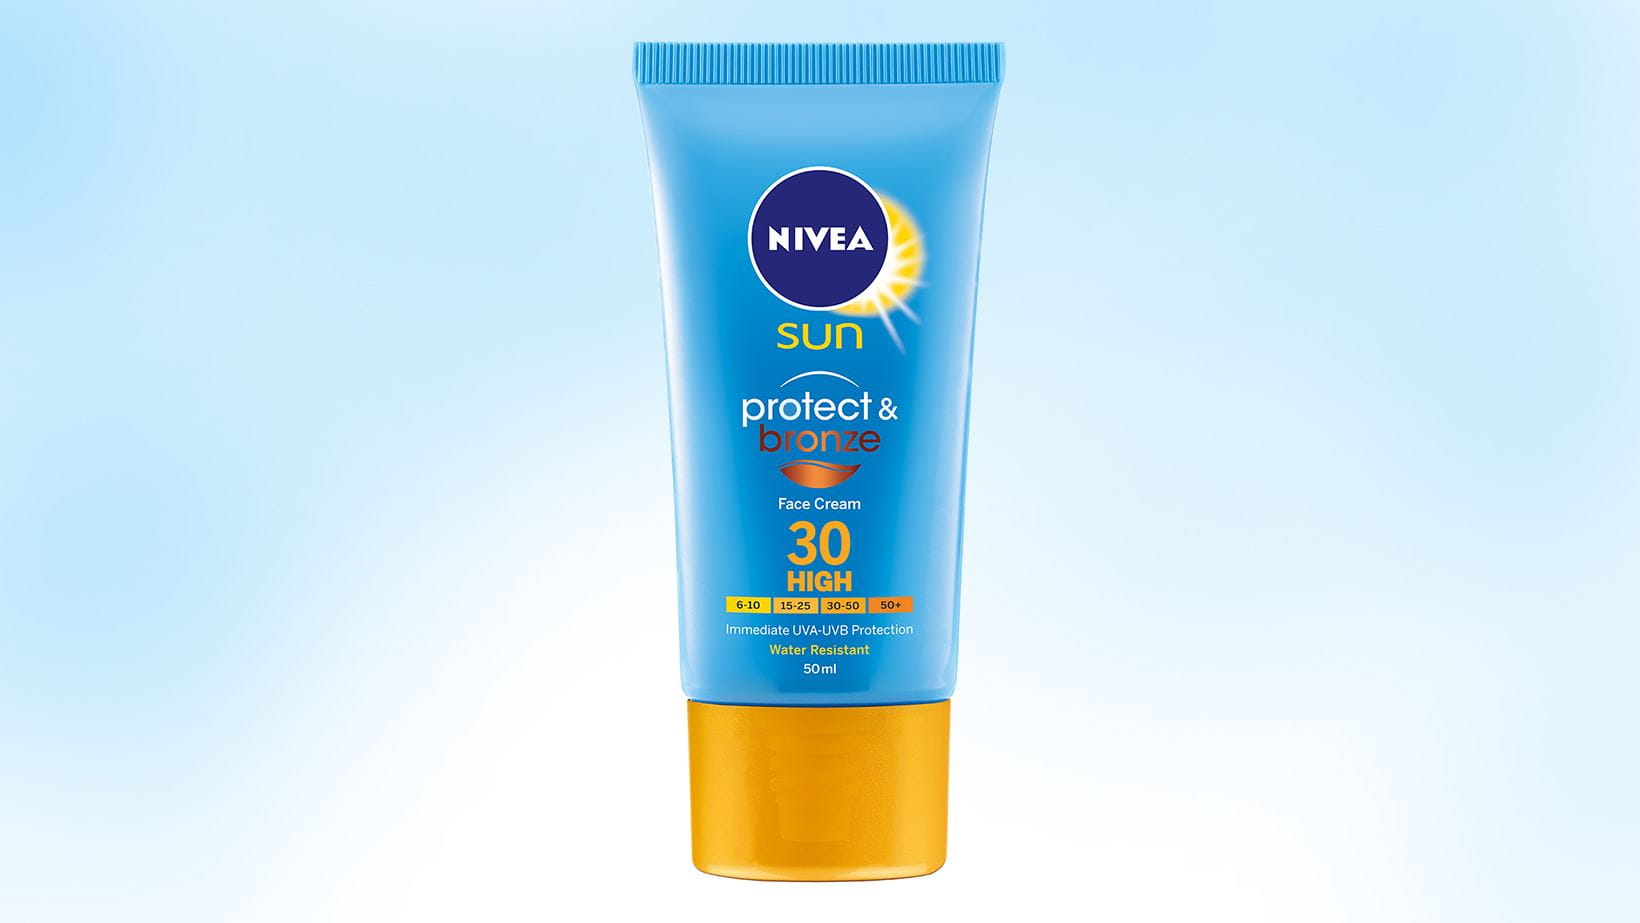 NIVEA Sun Protect Bronze